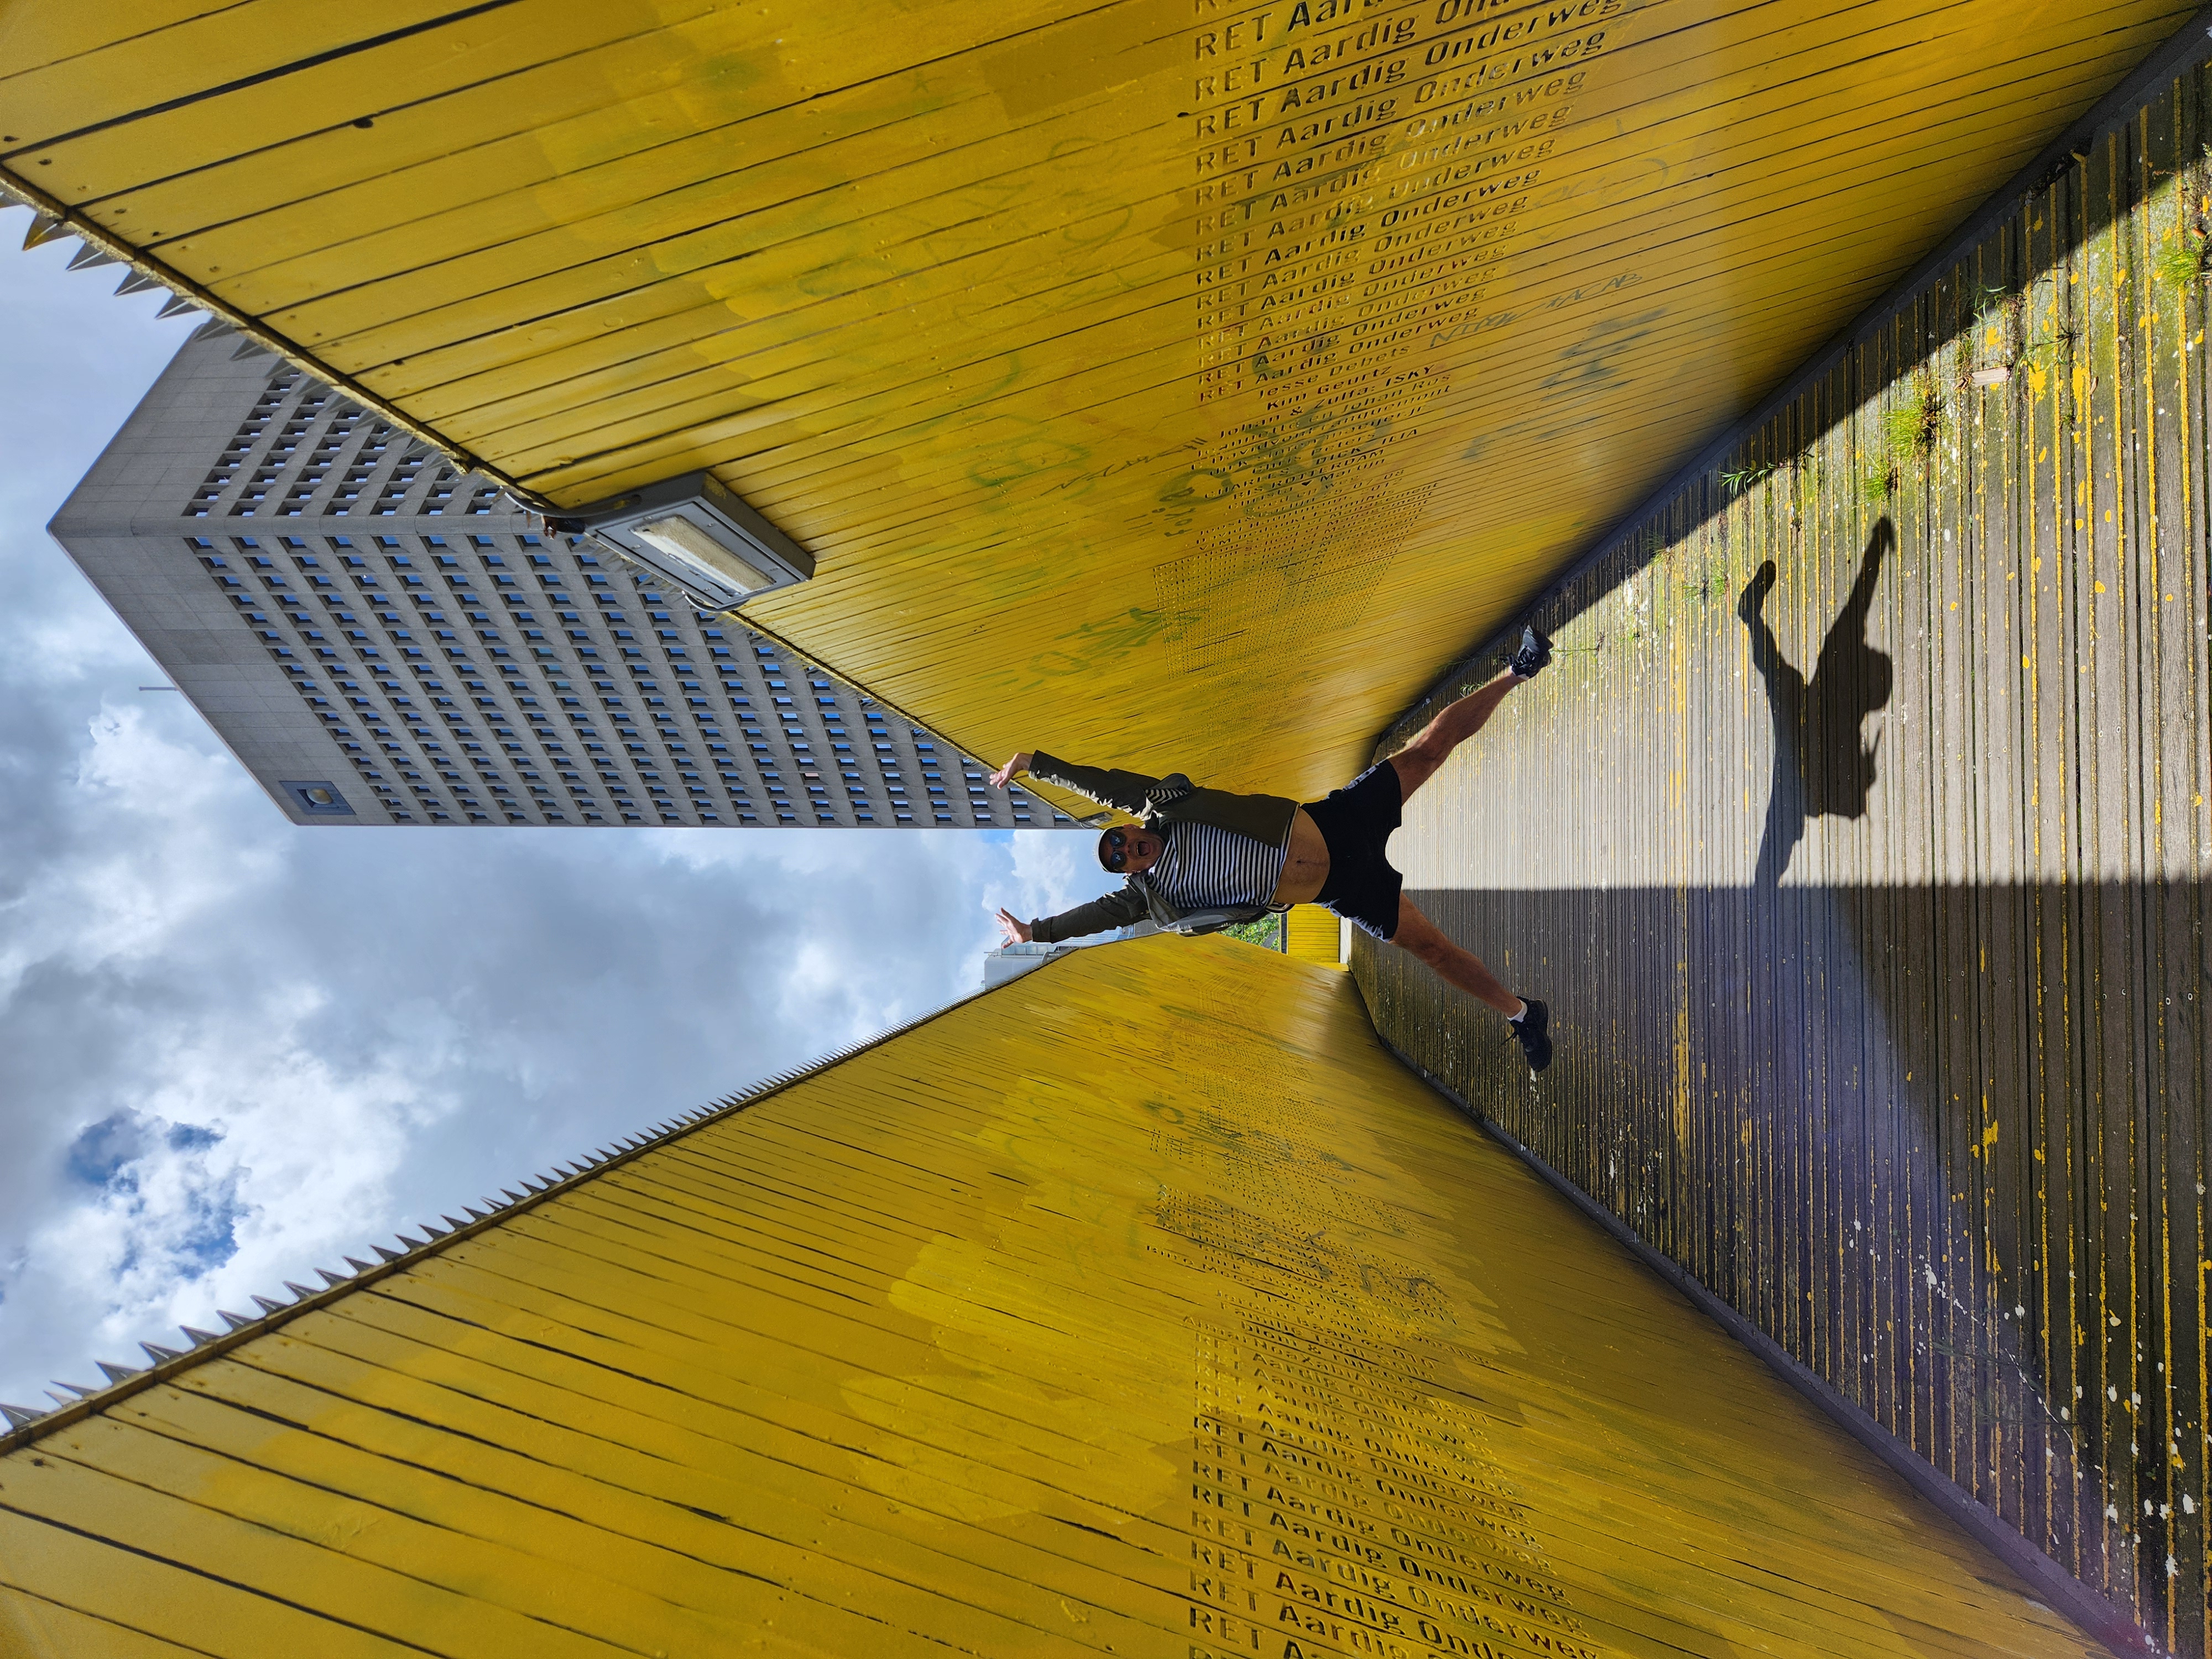 Mark doing a star jump inside the wooden luchtsingel pedestrian bridge, it is painted yellow